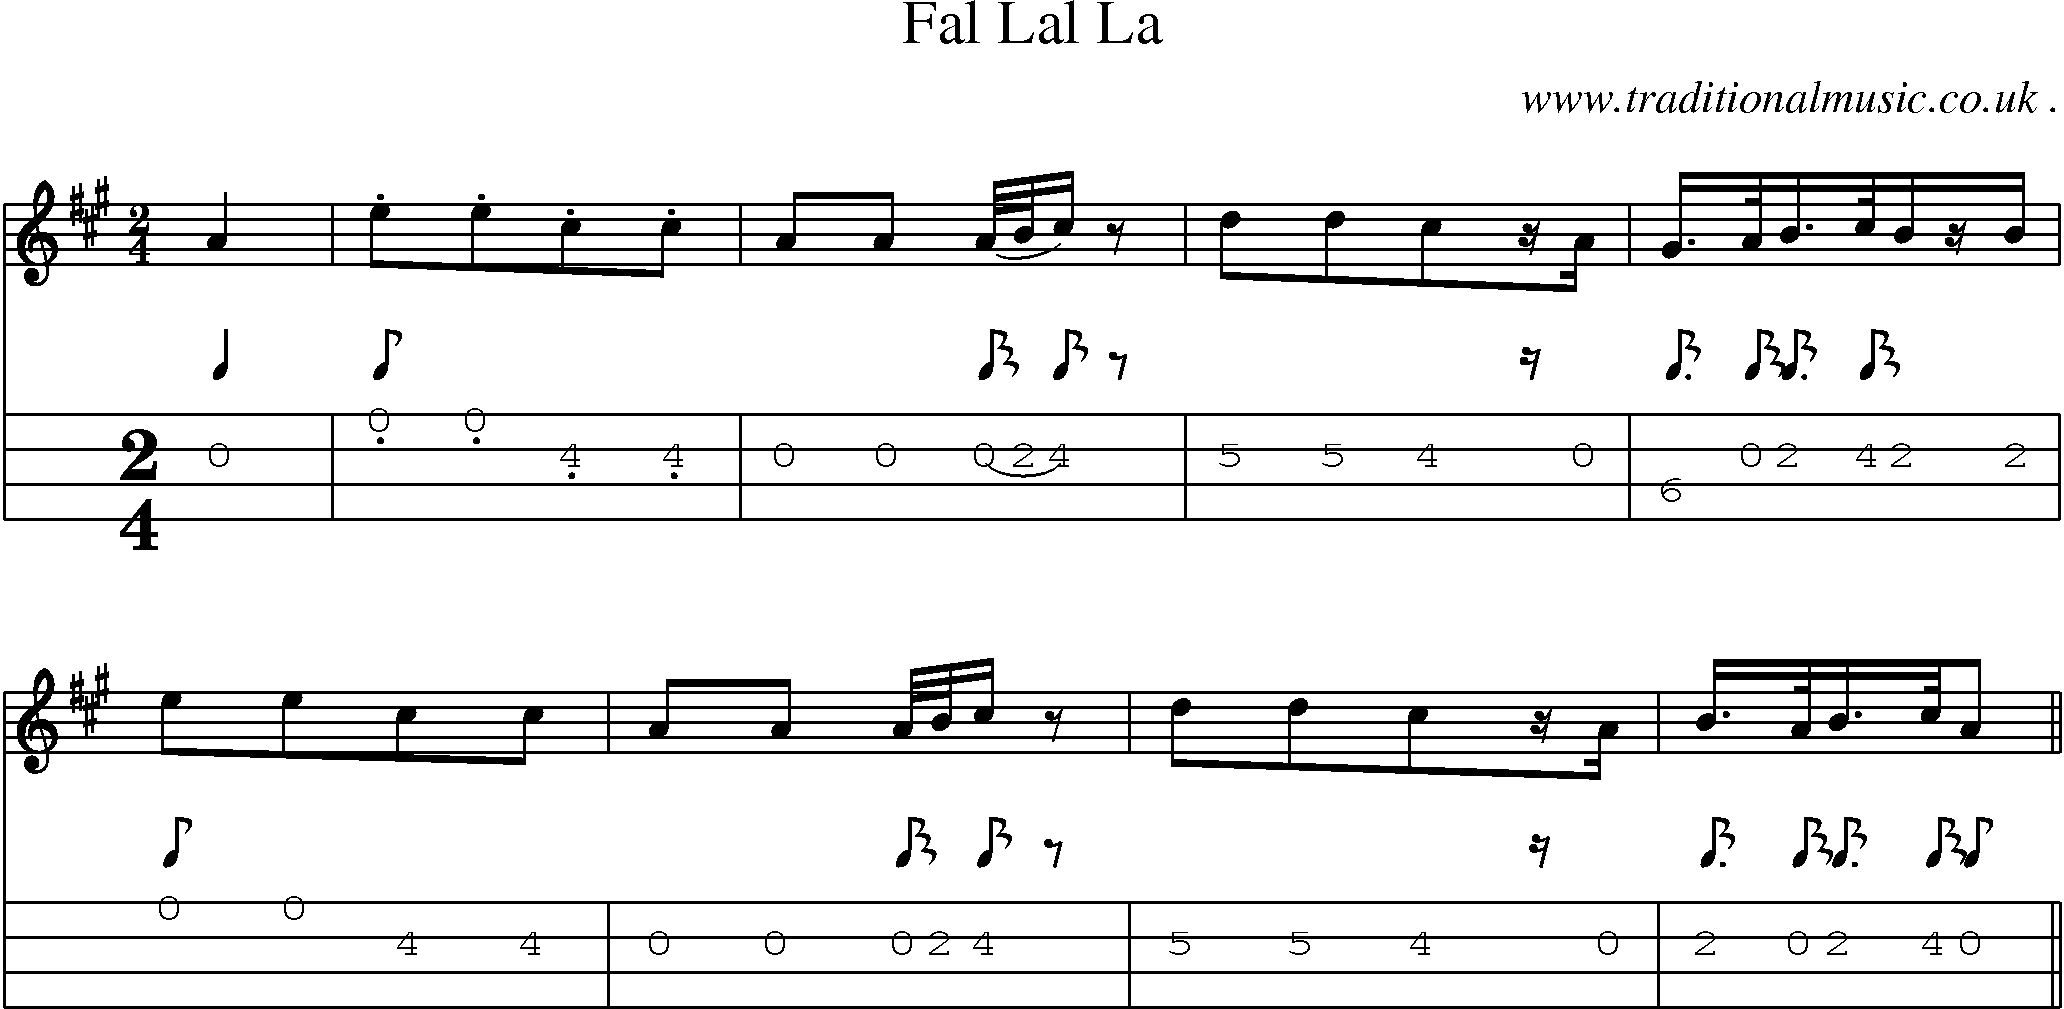 Sheet-Music and Mandolin Tabs for Fal Lal La 